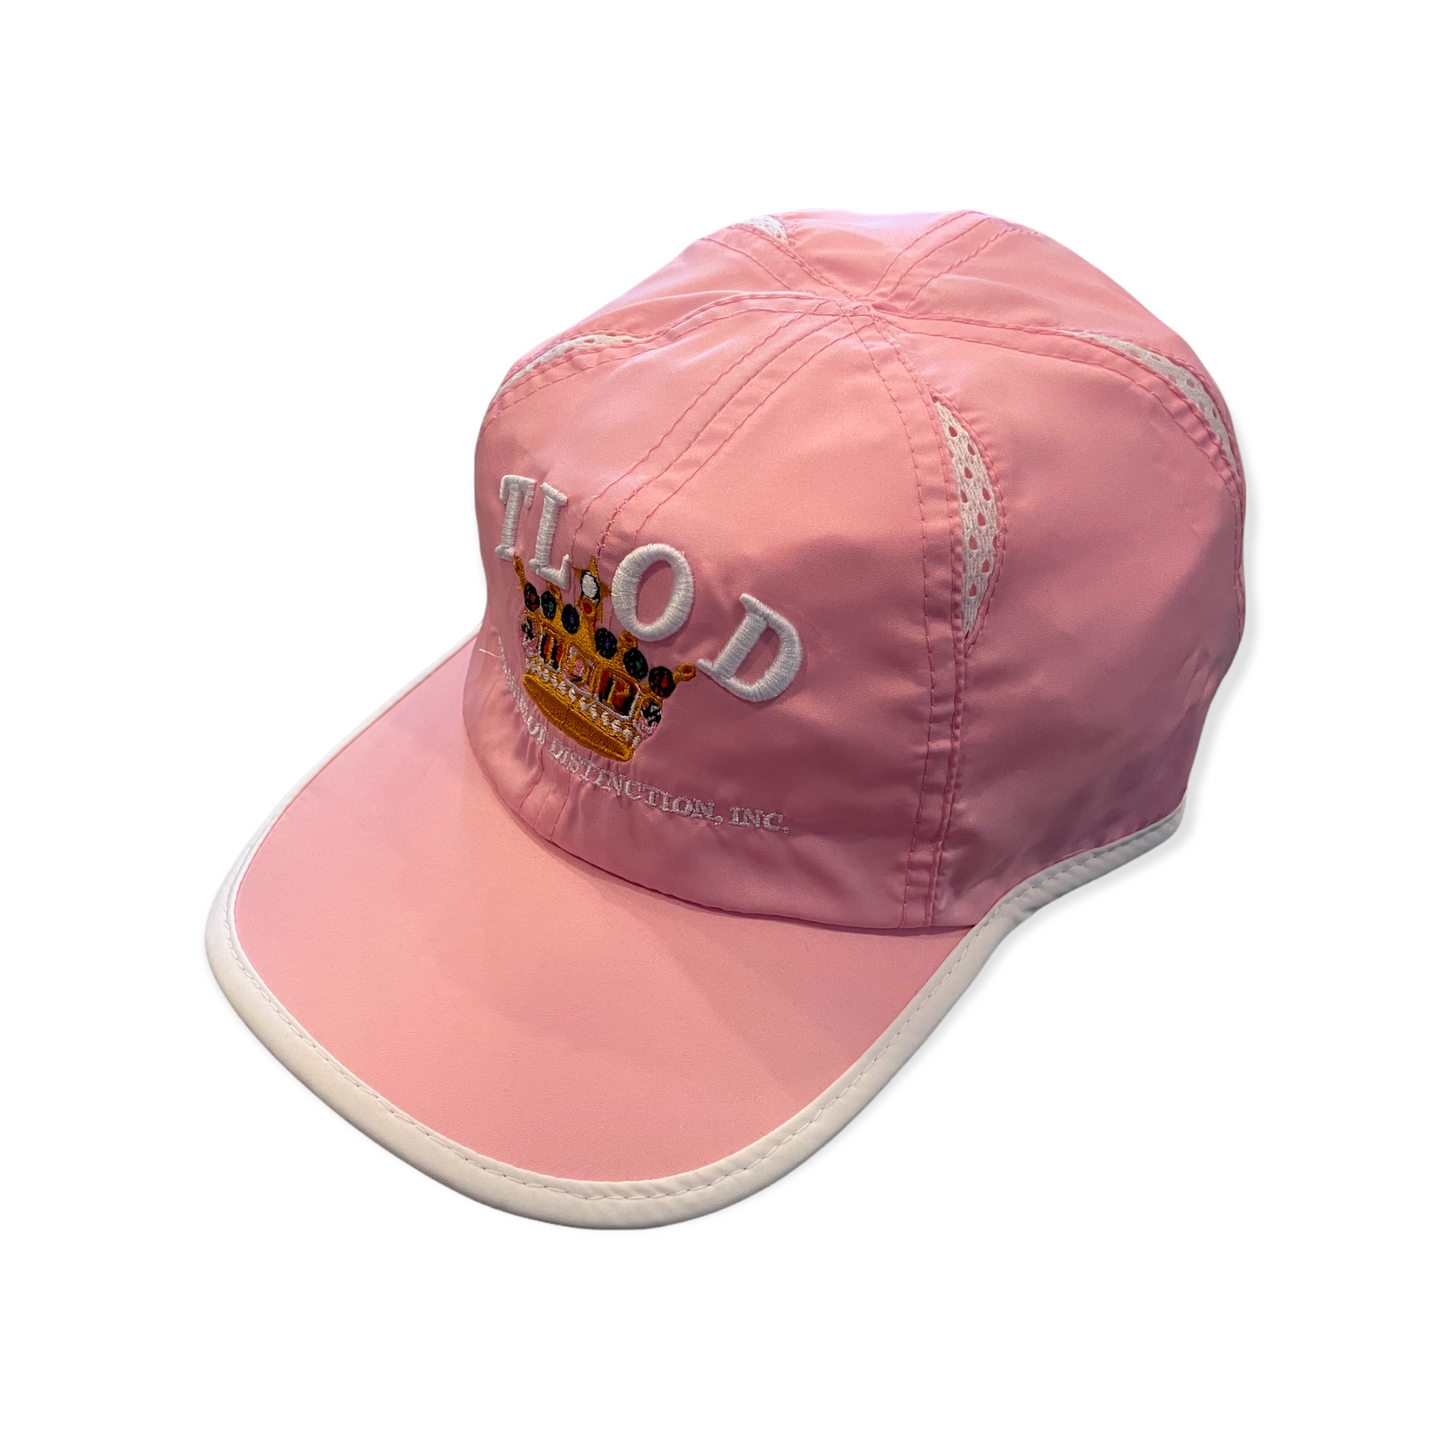 "Pretty Sporty" TLOD Logo Hat in Pink